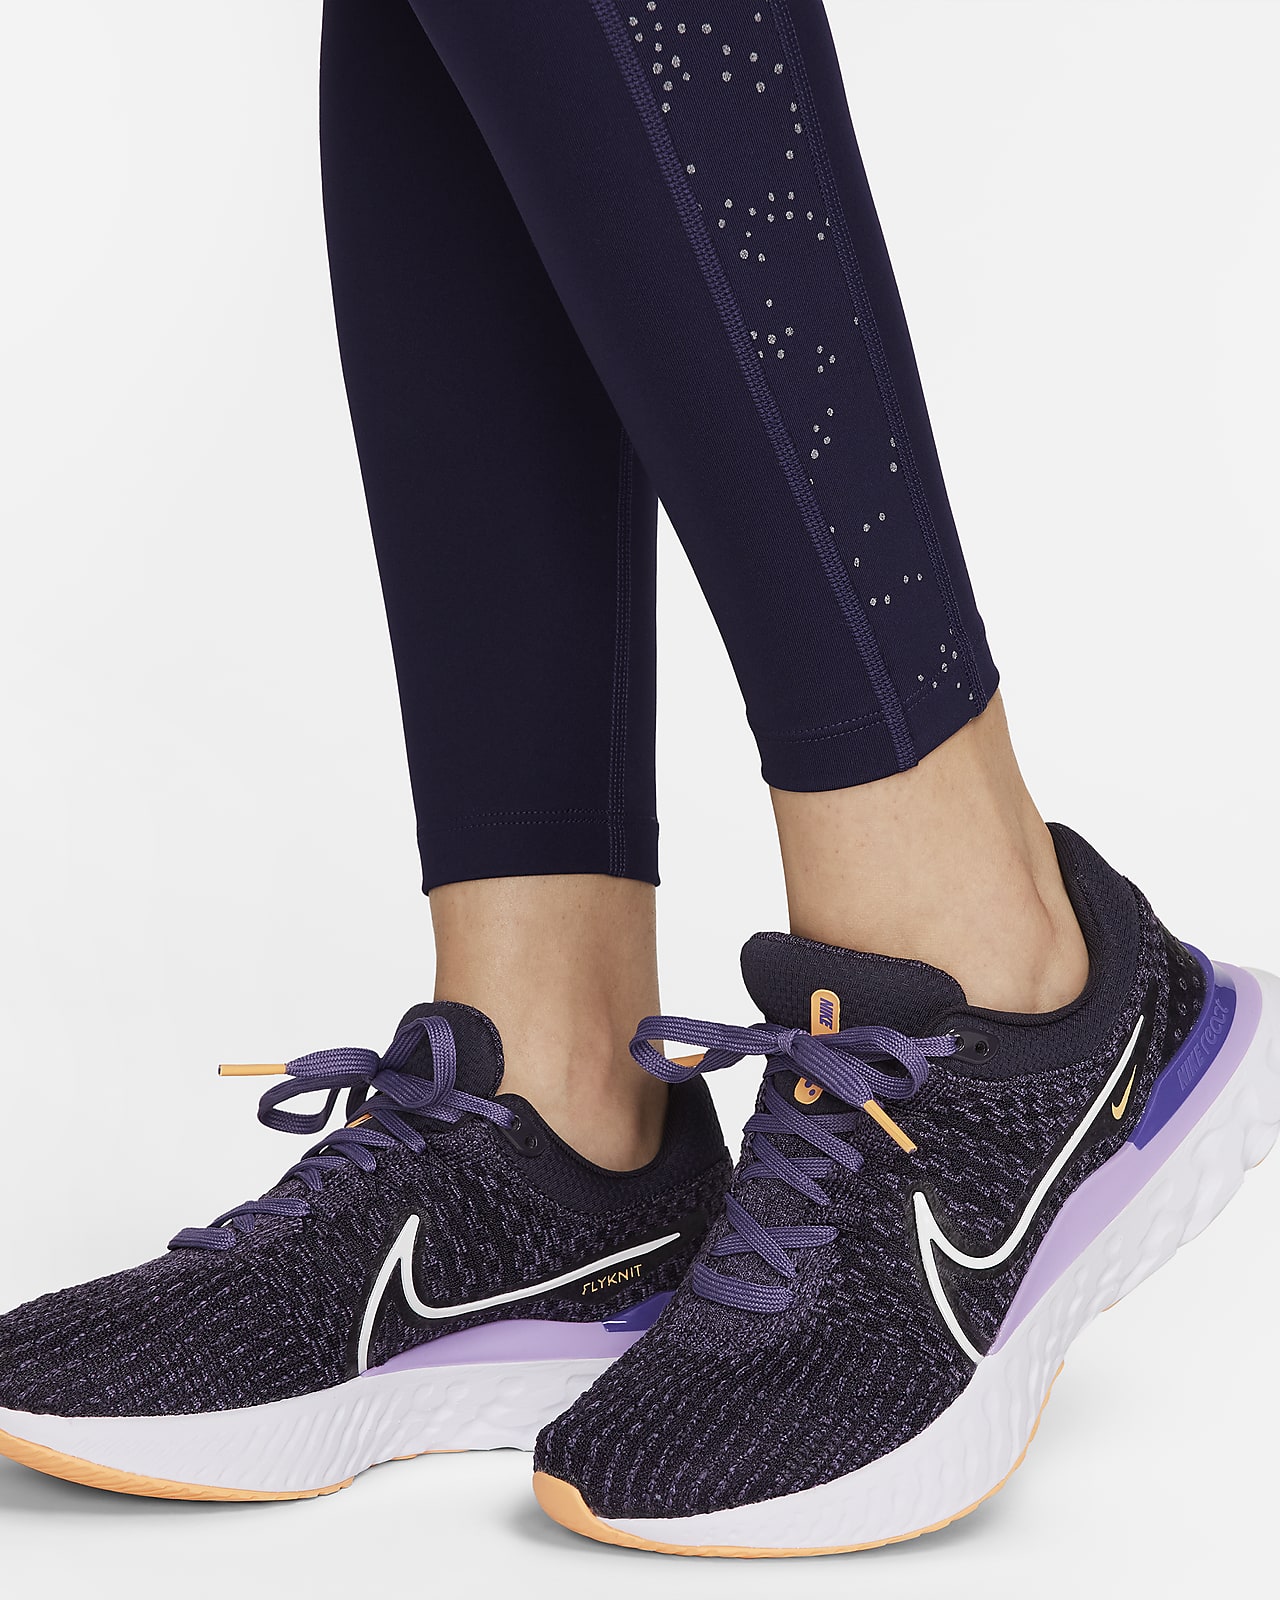 Nike Speed Women's 7/8 Running Leggings in BLACK Size XS - $28